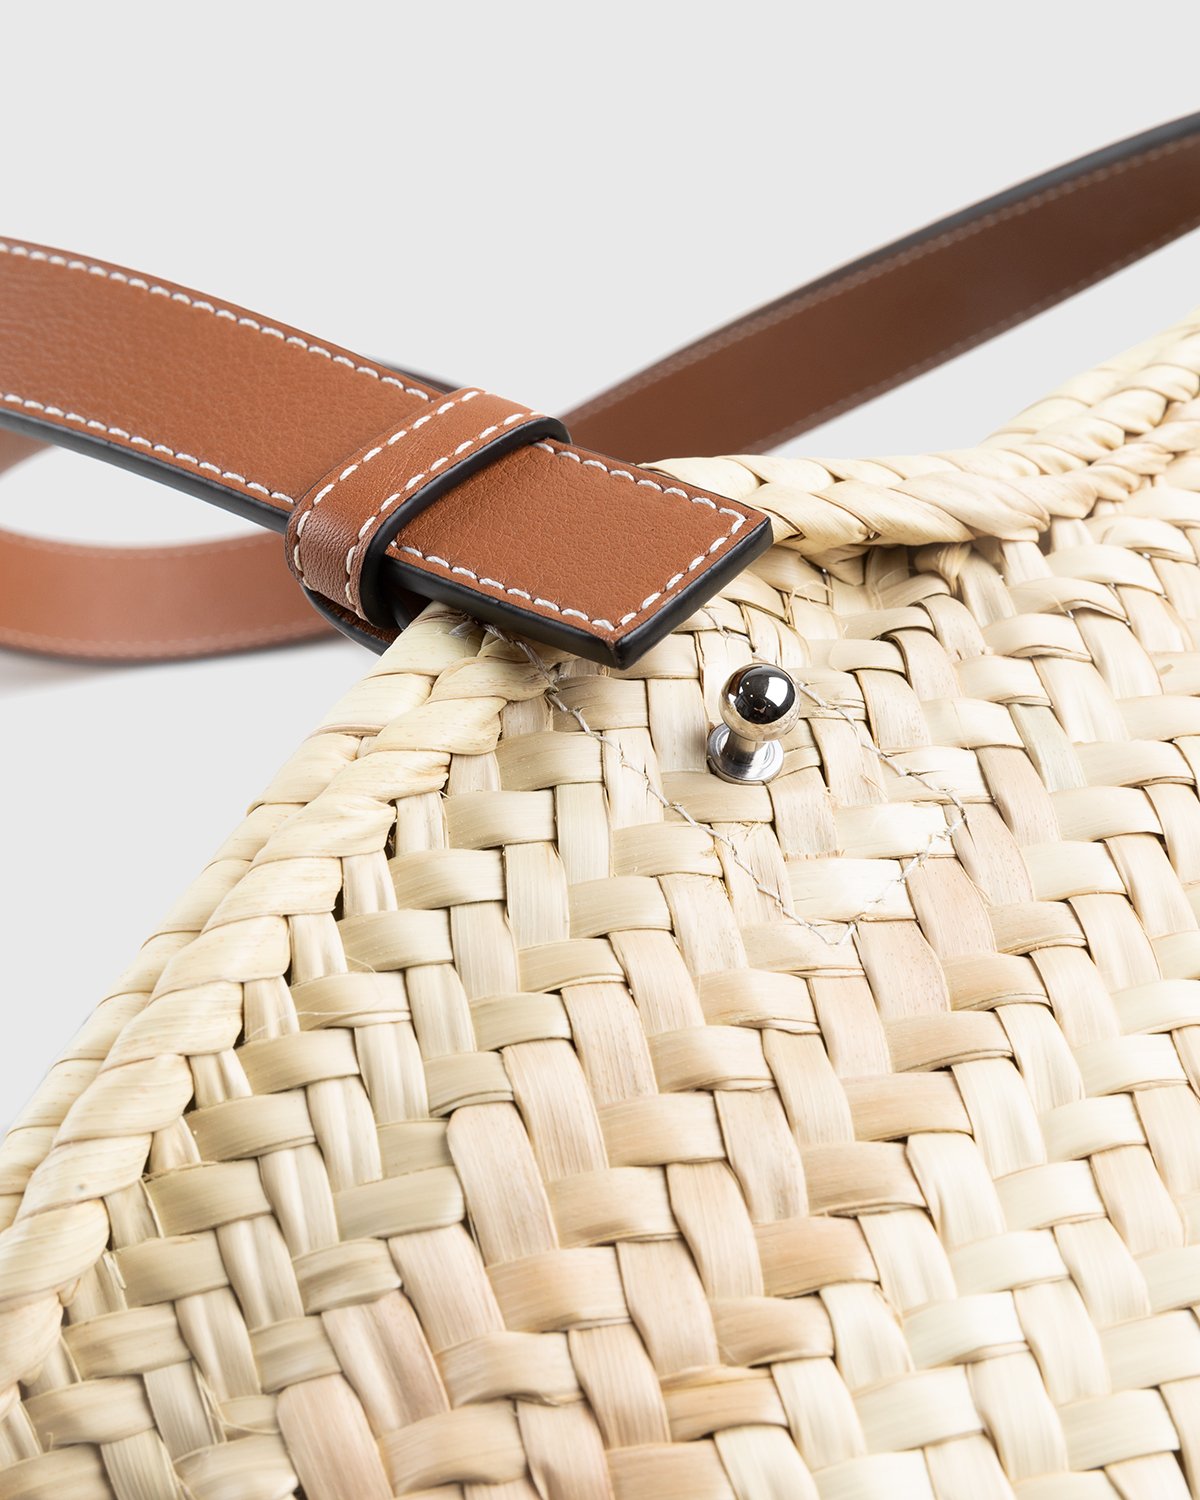 Loewe - Paula's Ibiza Basket Bag Natural/Tan - Accessories - Beige - Image 3